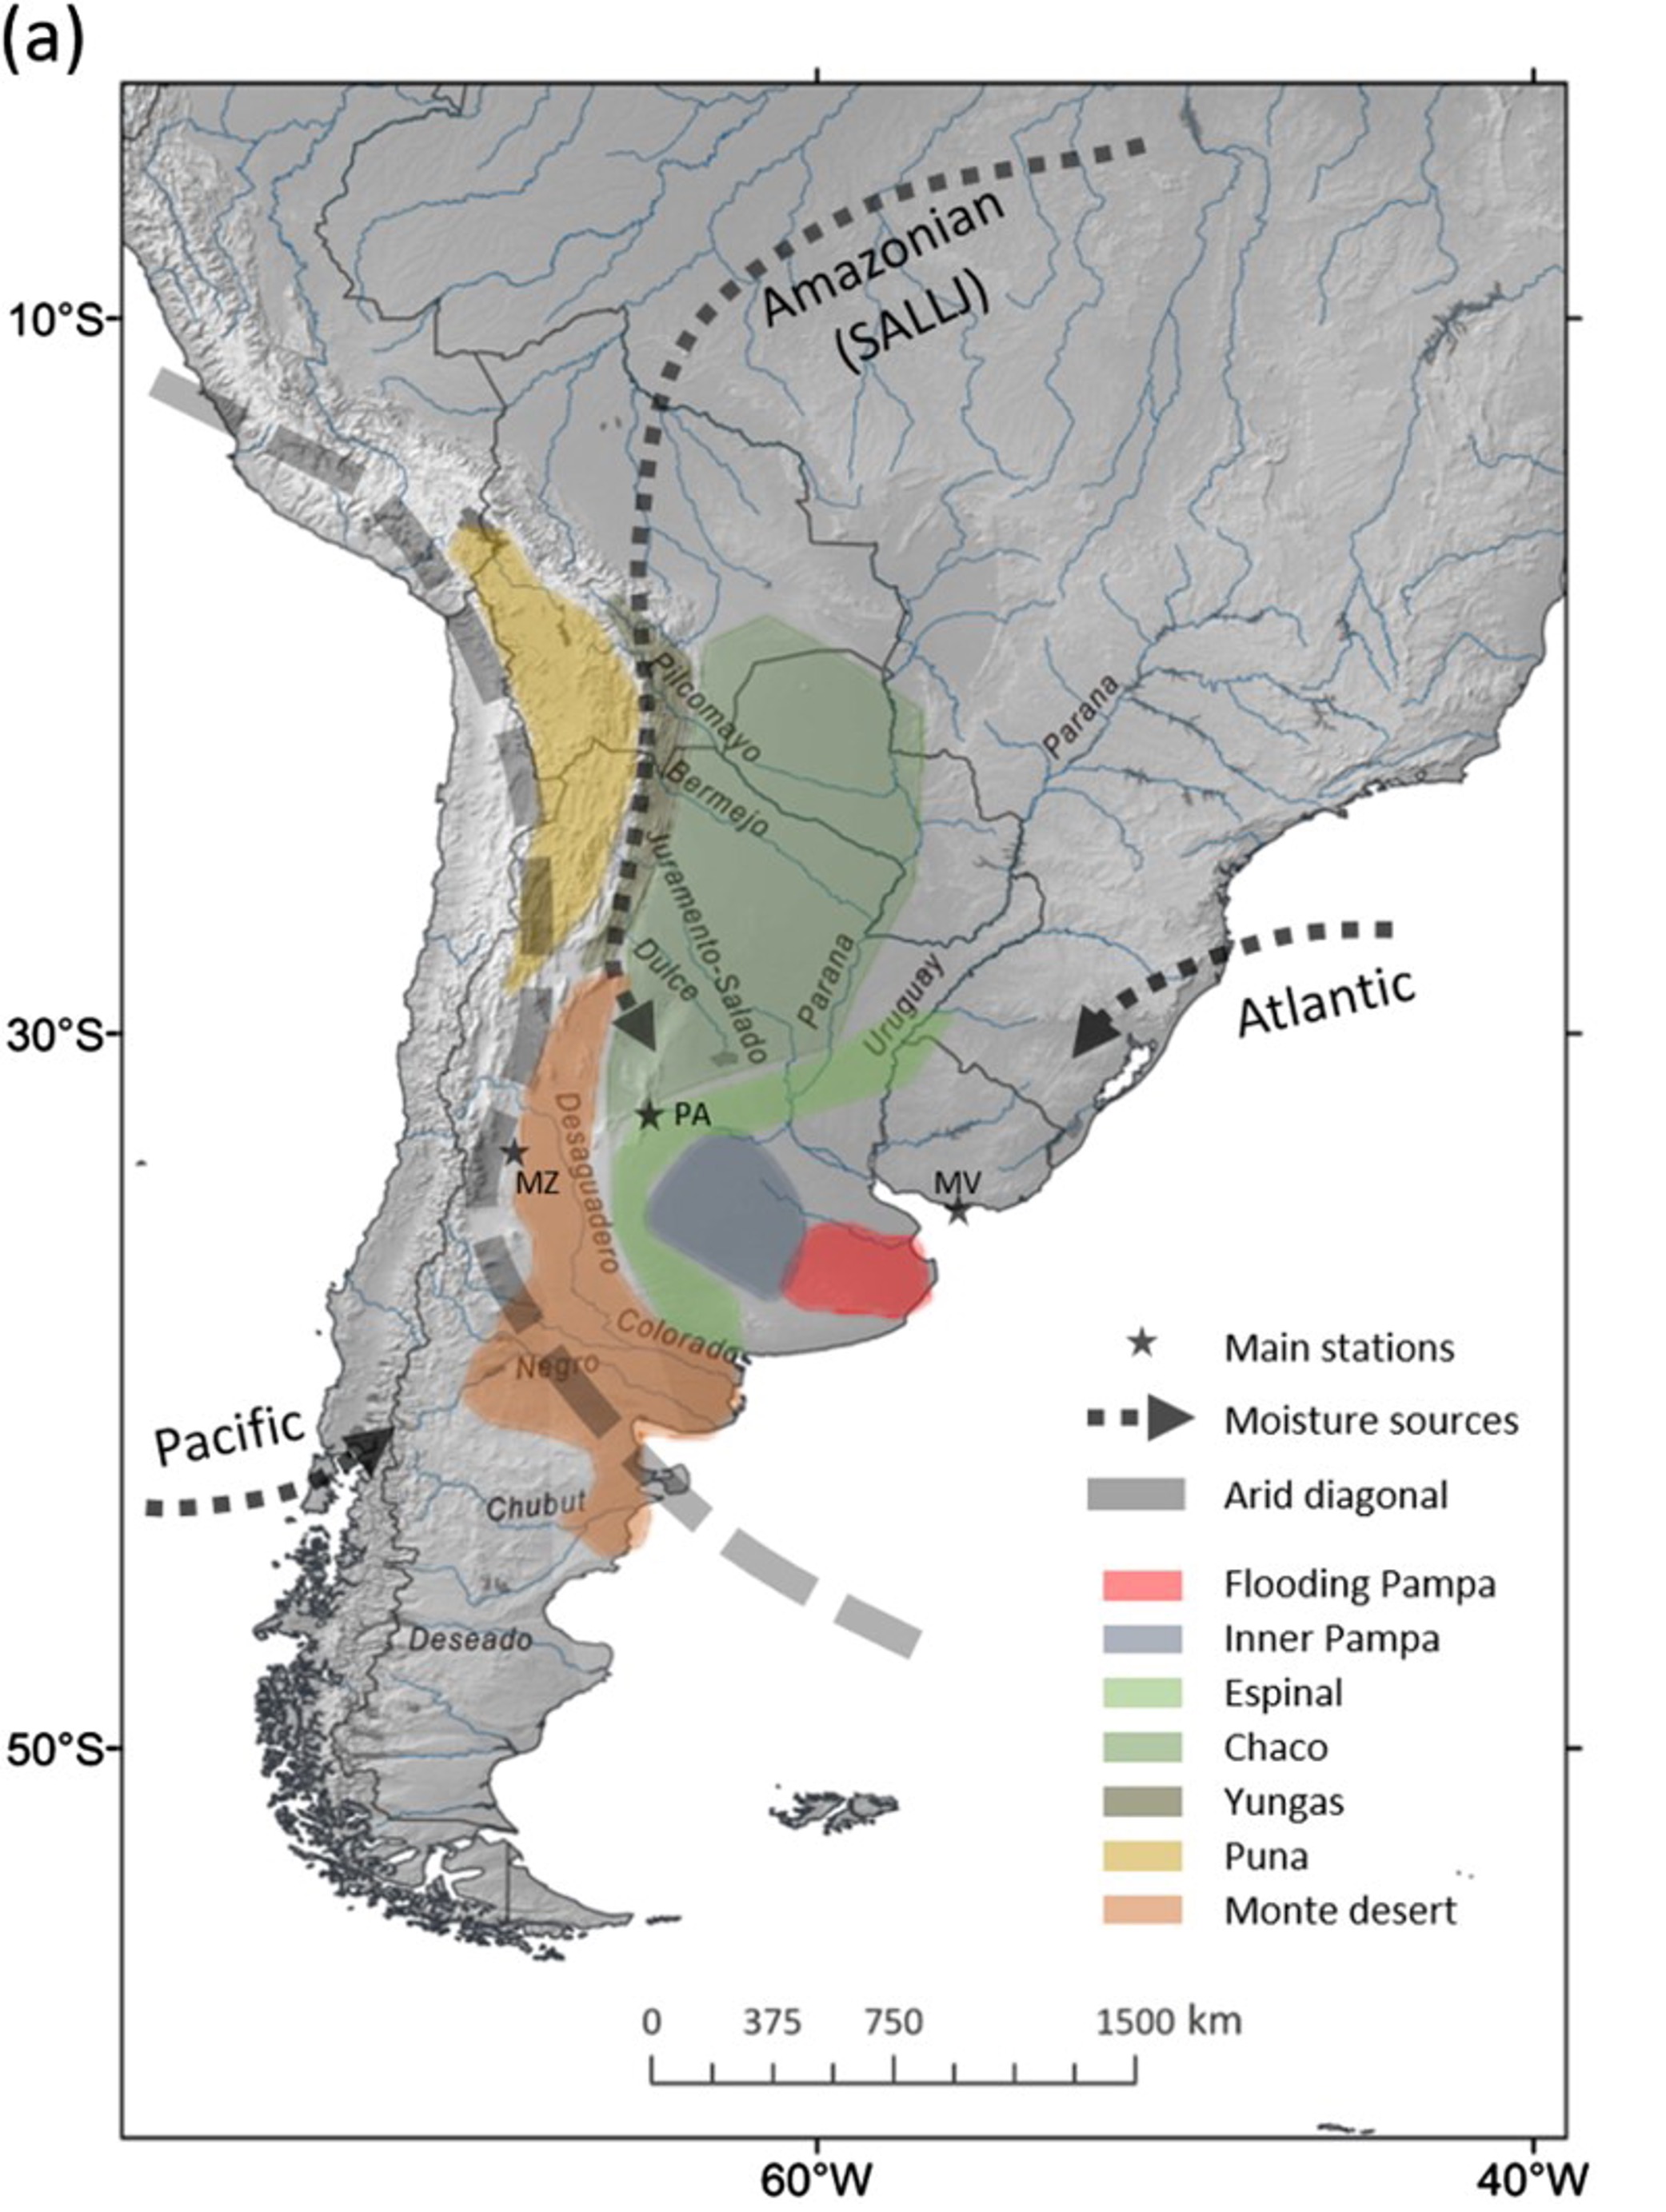 Major ecological zones in Argentina